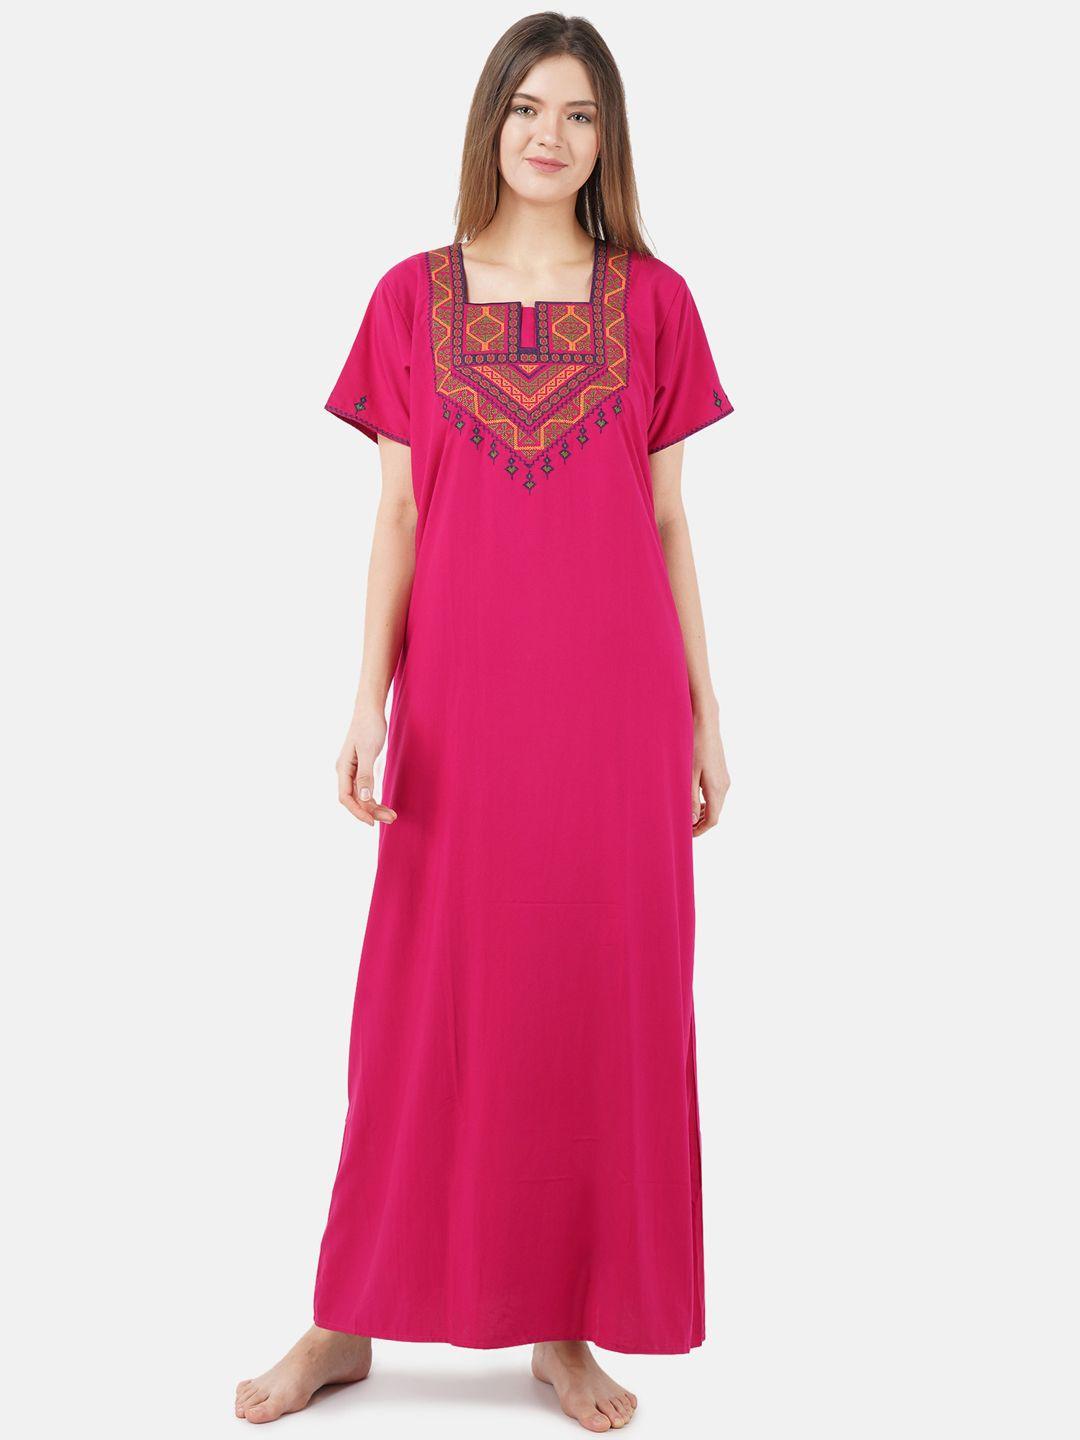 koi-sleepwear-woman-pink-embroidered-maxi-nightdress